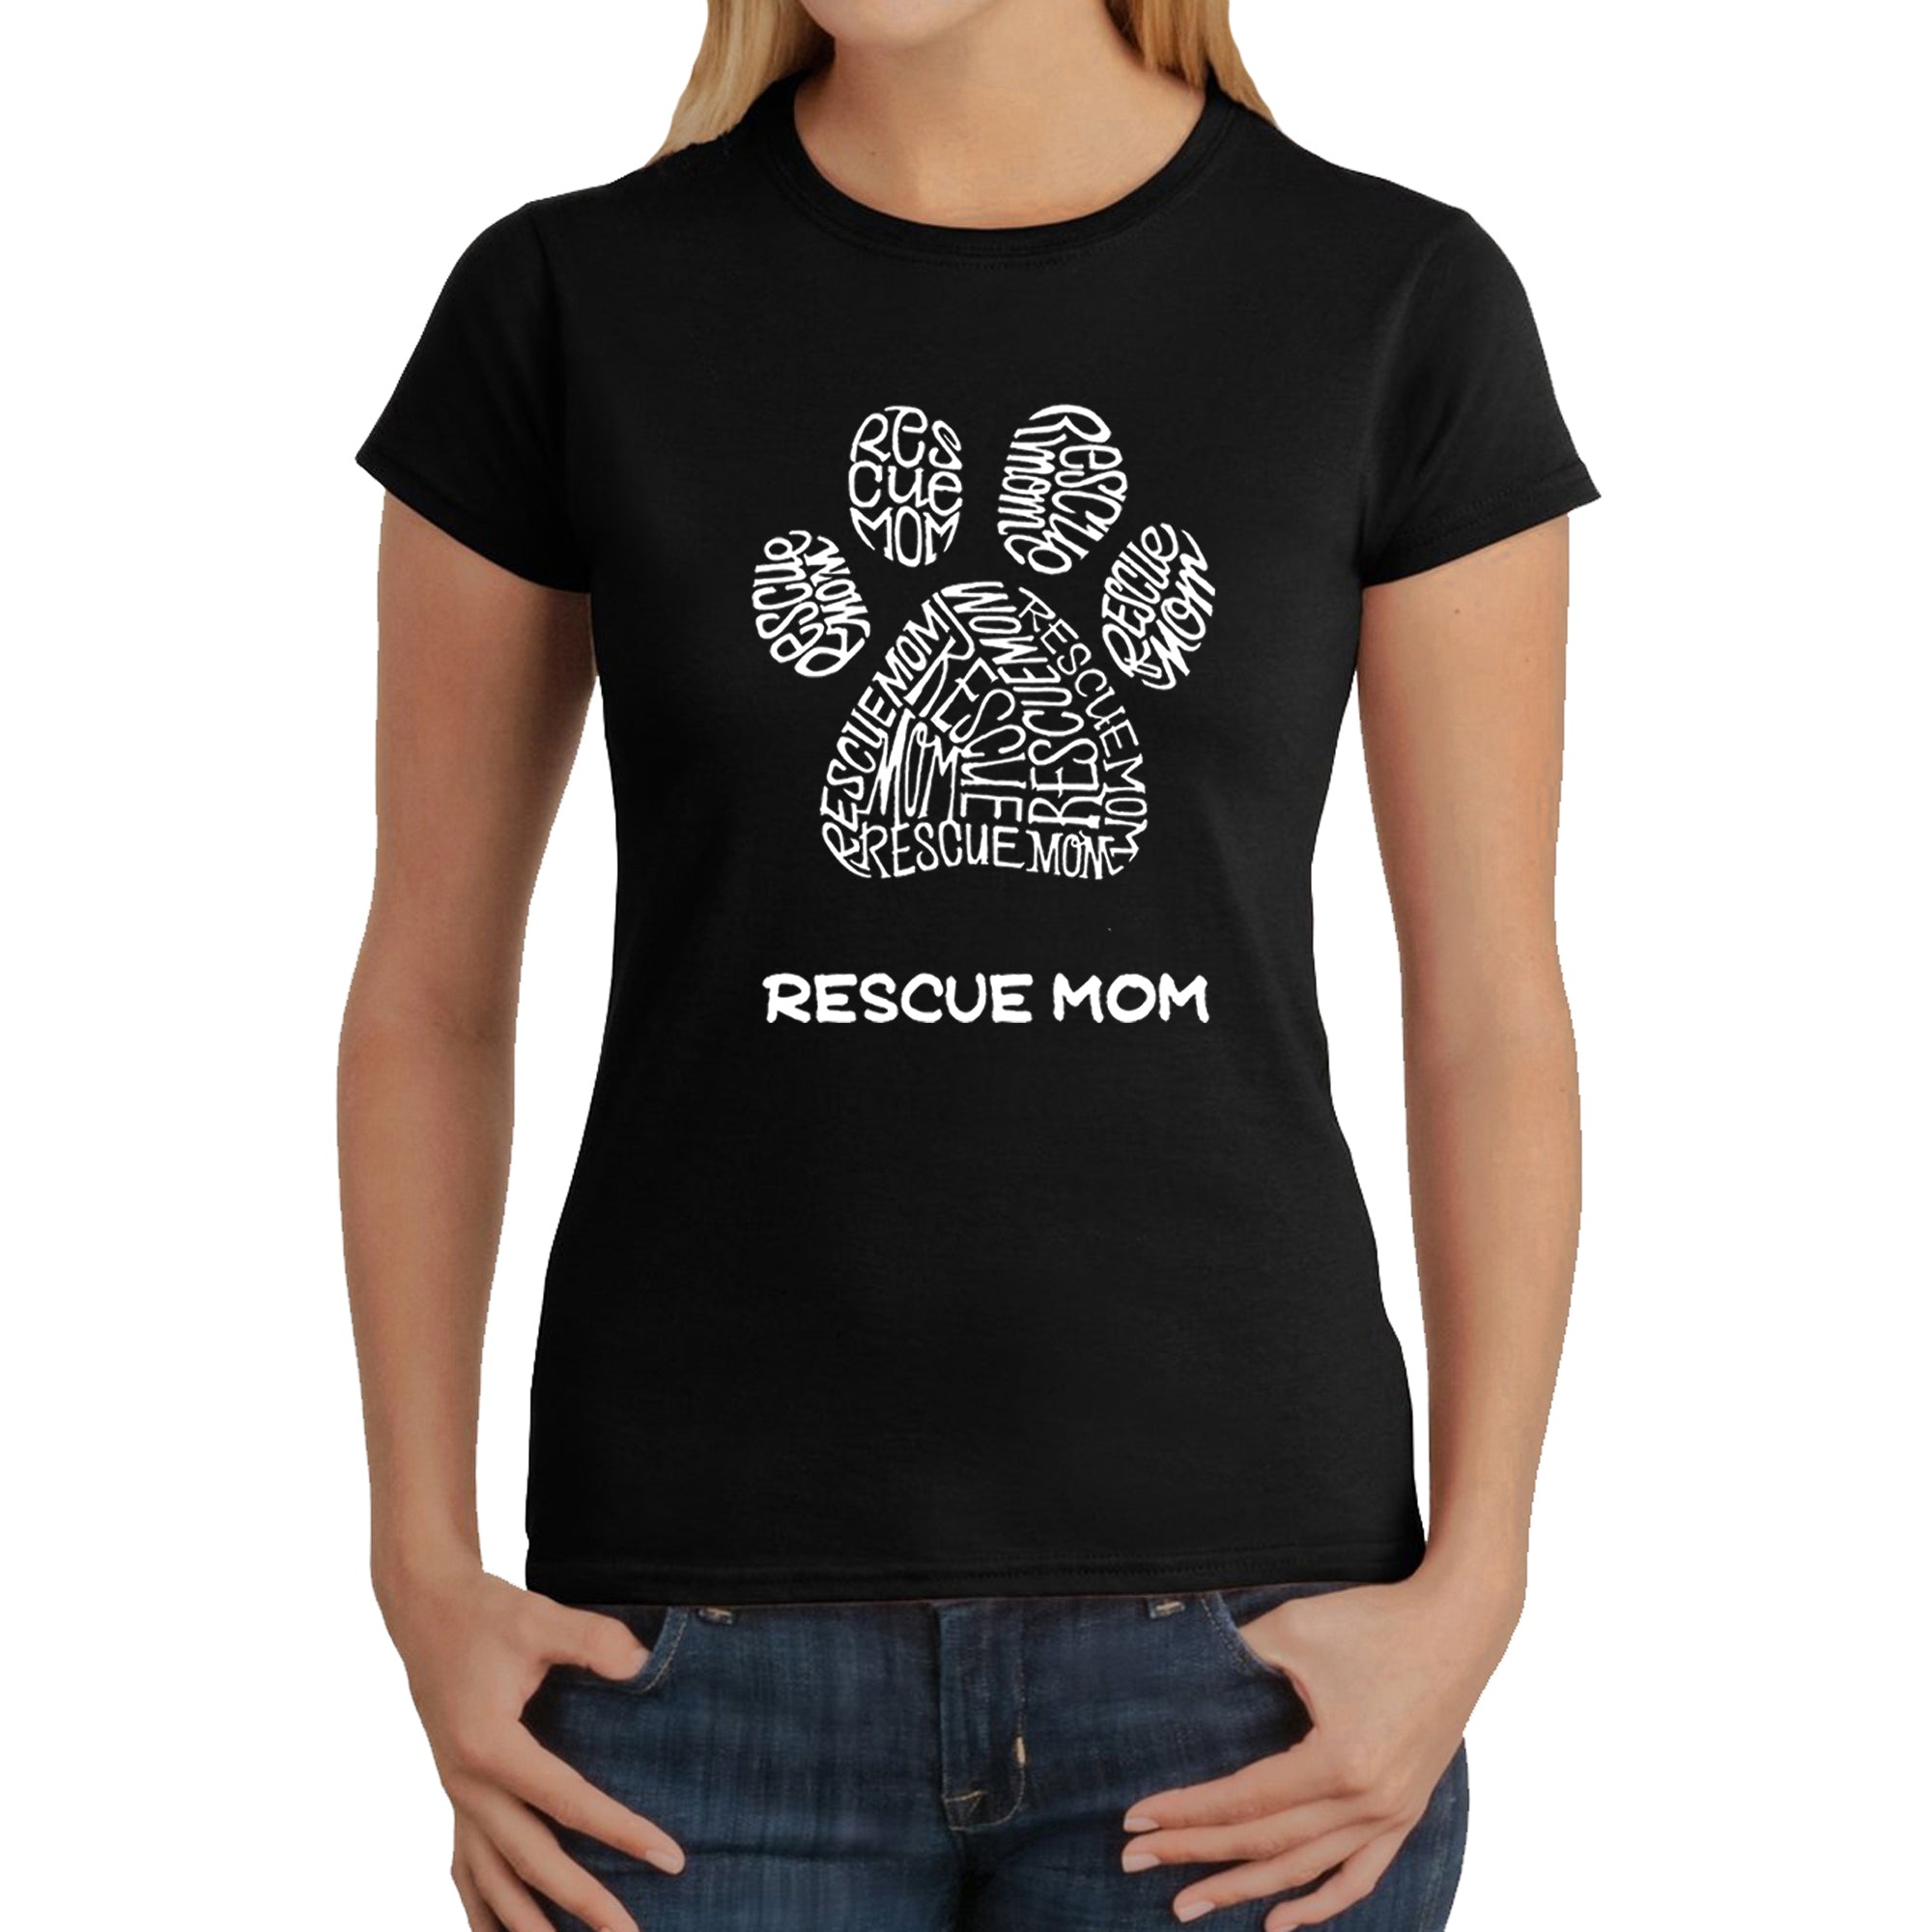 Rescue Mom - Women's Word Art T-Shirt - Black - Small